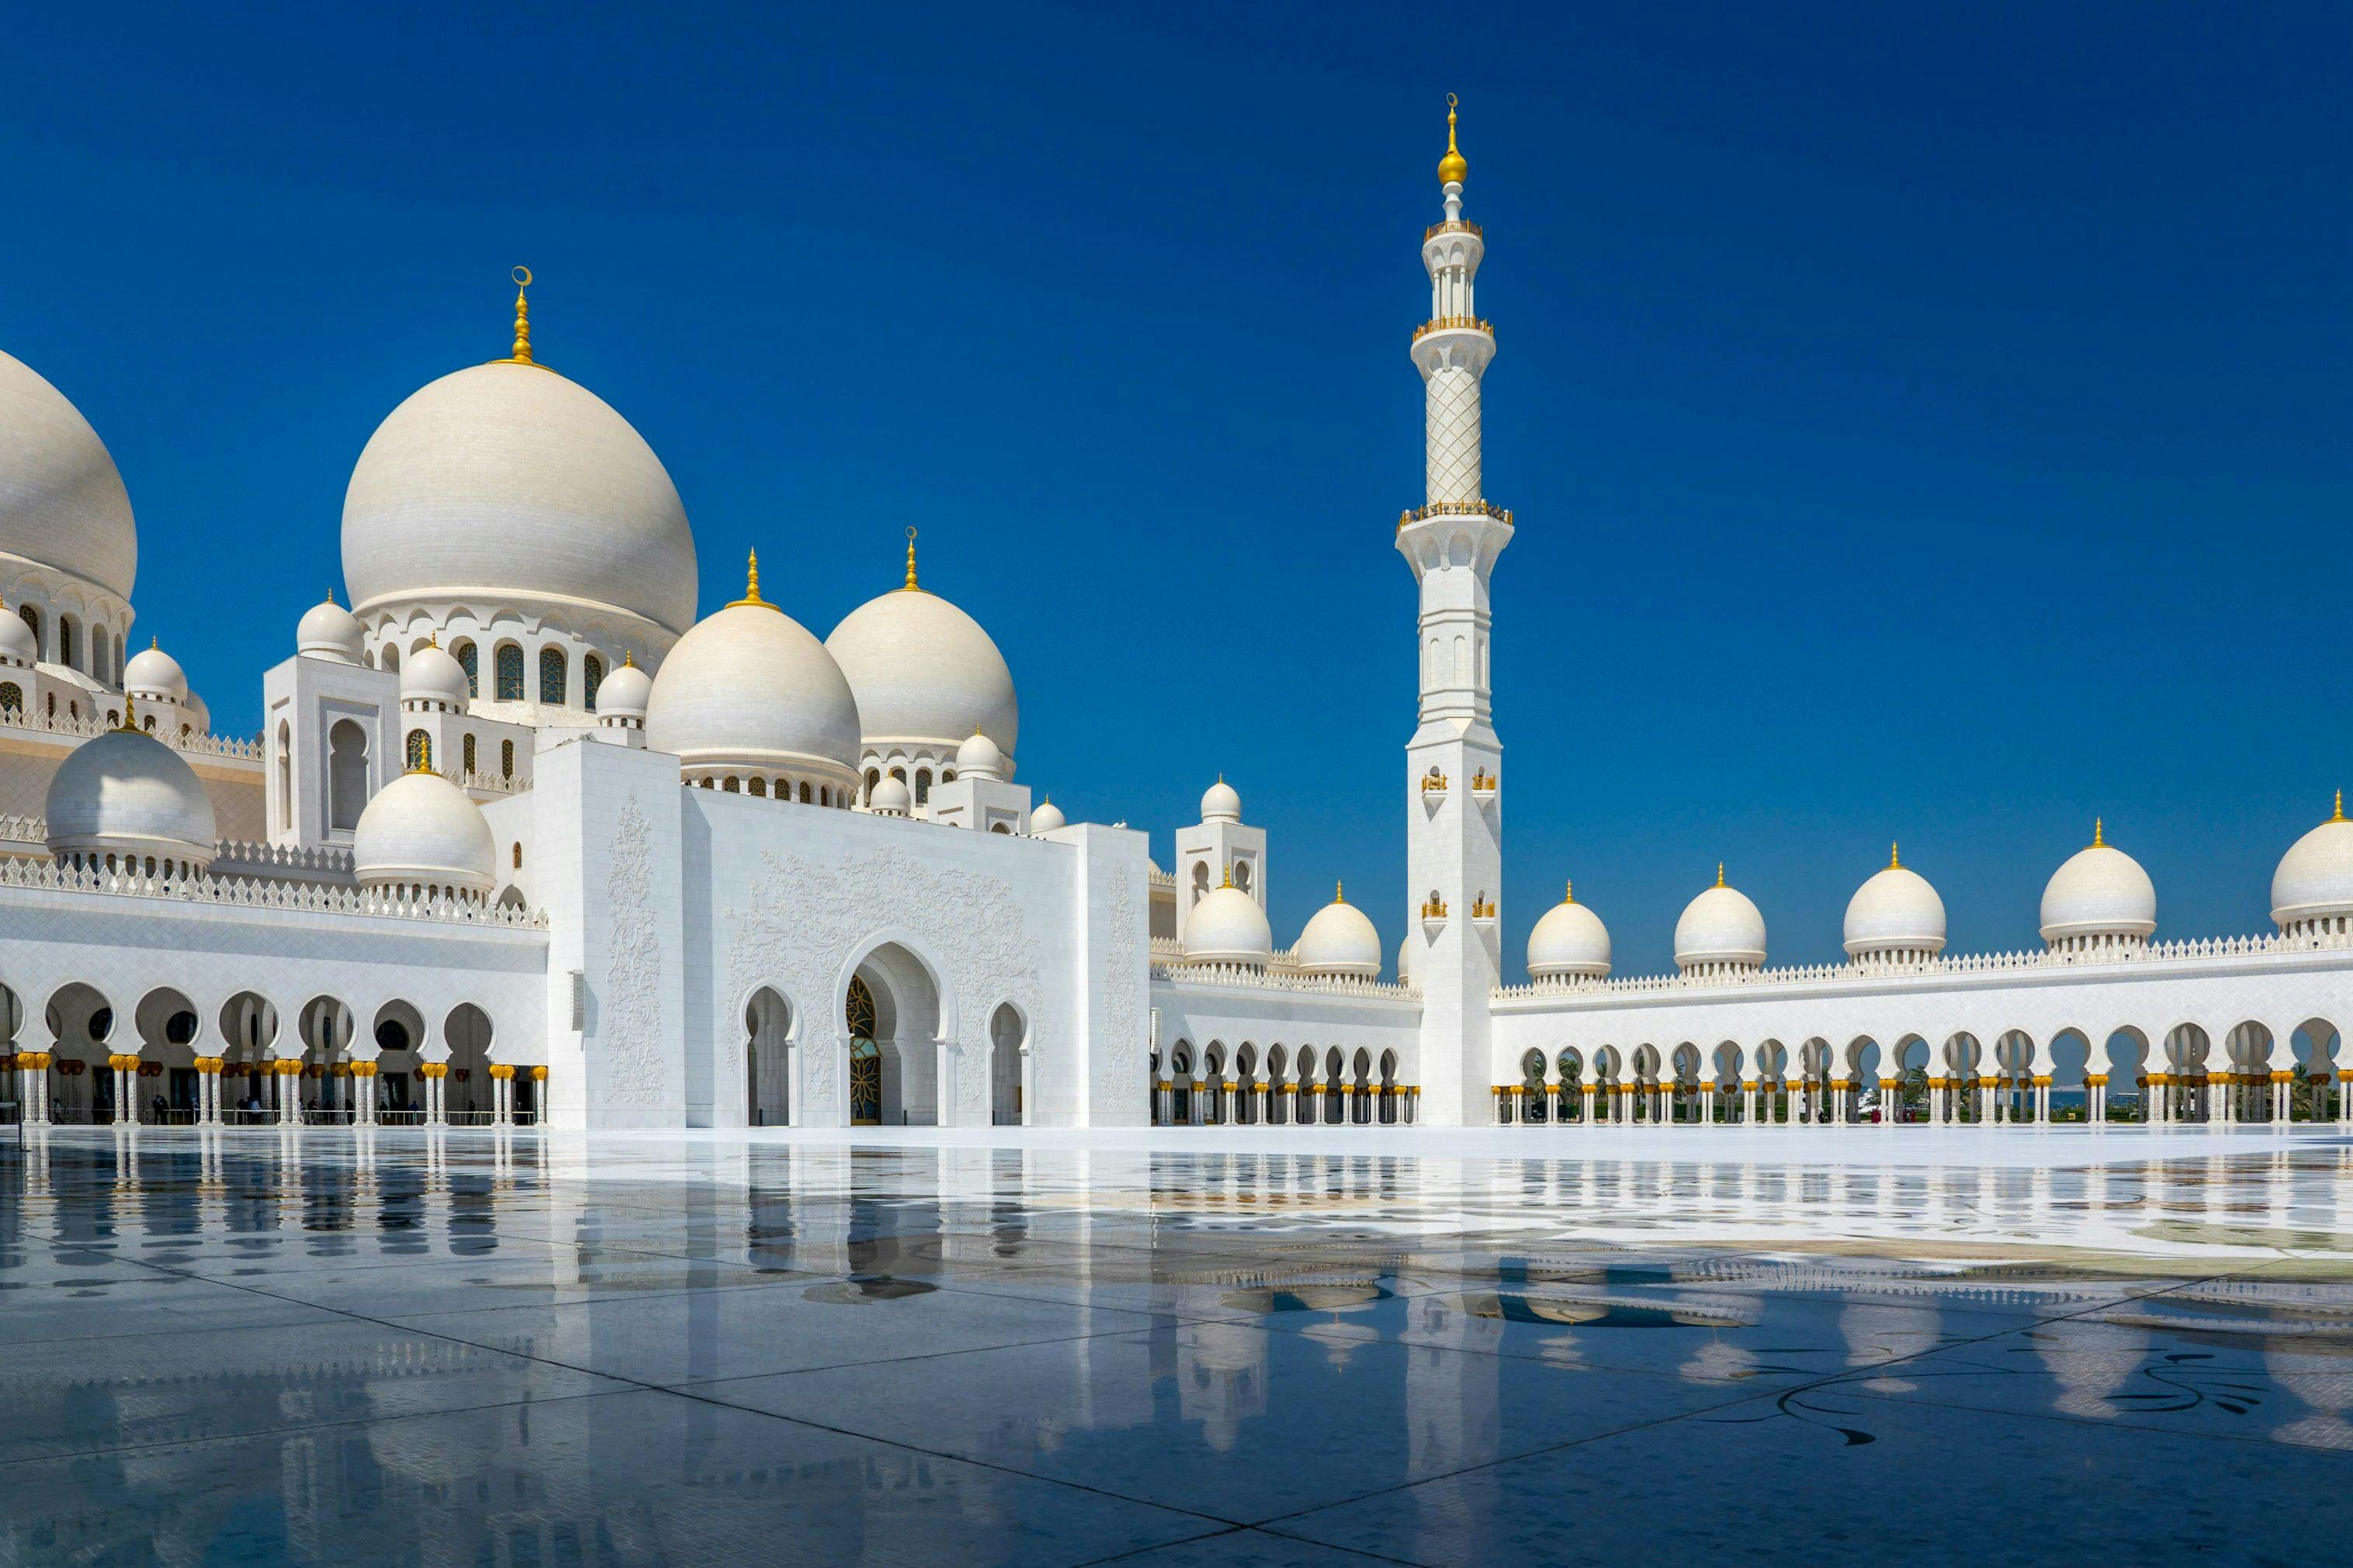 Sheikh Zayed Grand Mosque in Abu Dhabi, UAE.